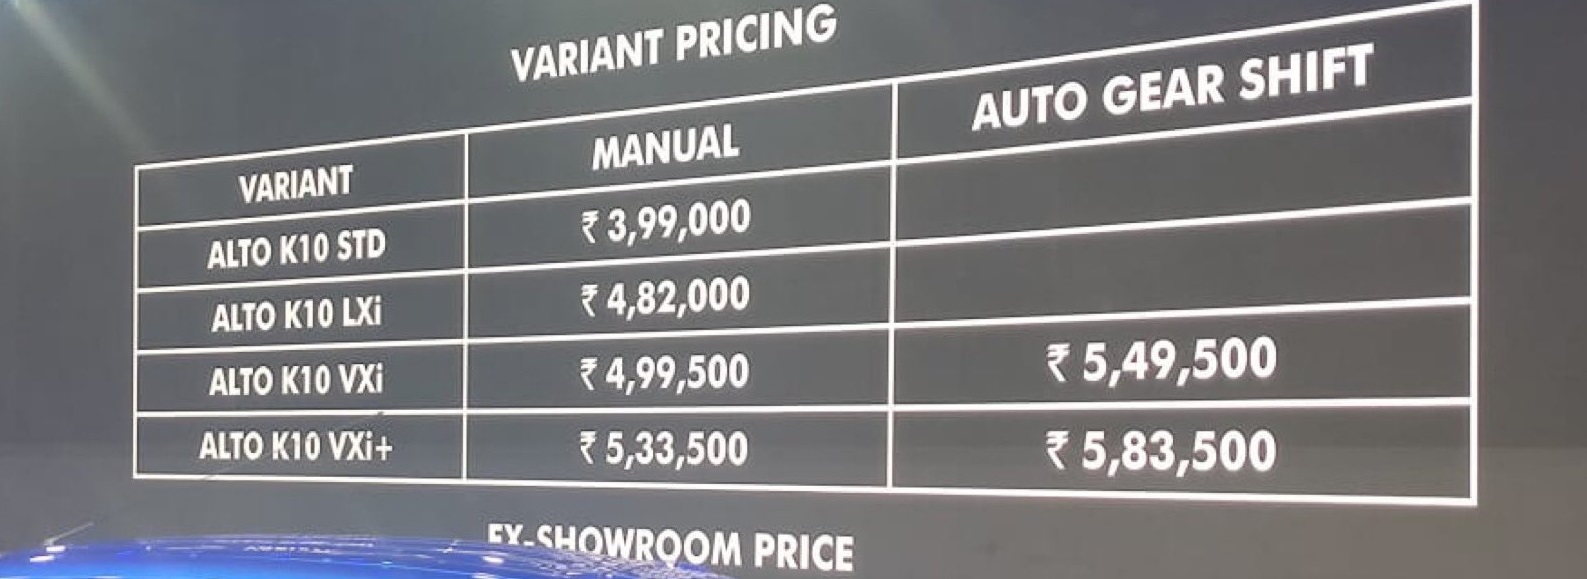 Maruti Suzuki Alto K10 2022 Pricing